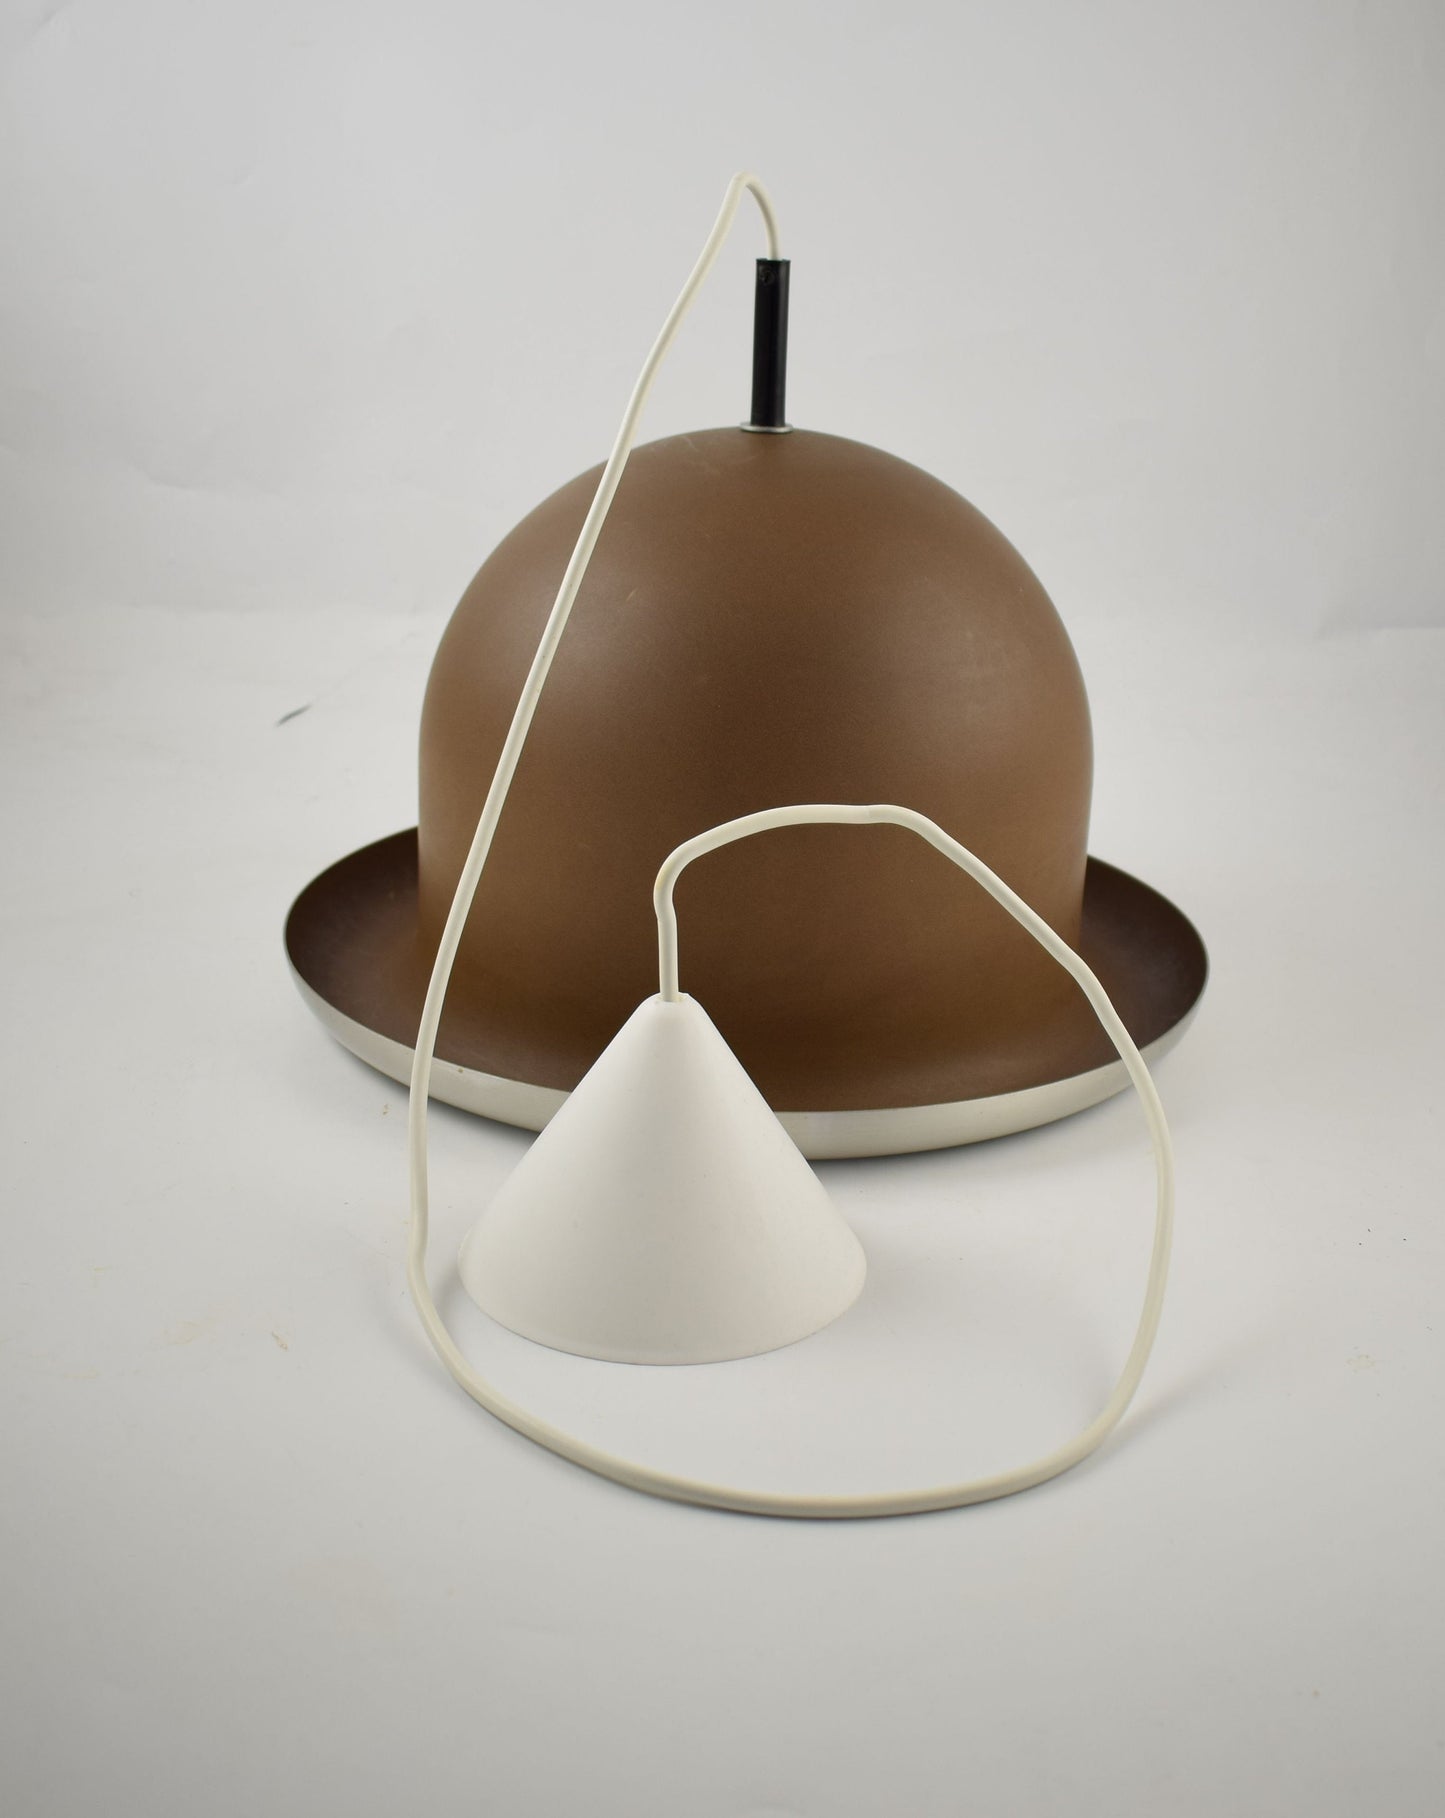 Raak Bowler b-1072 pendant lamp by Casati and Ponzio cinnamon brown suspension Lamp from Raak light architects Amsterdam 1972